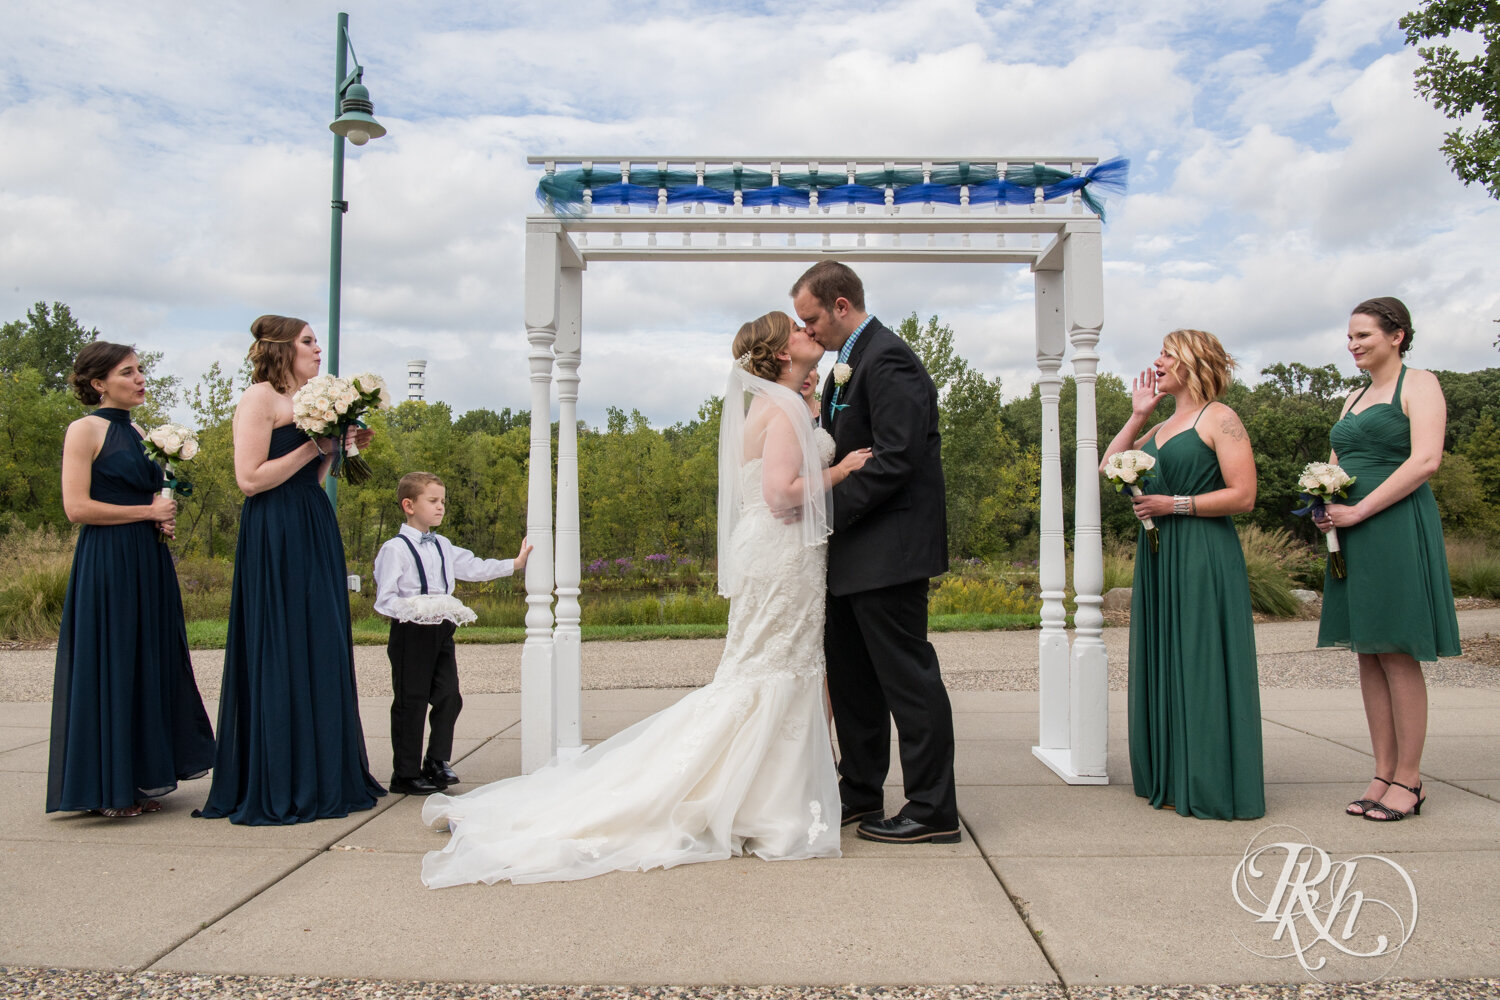 Bride and groom kiss at outdoor wedding ceremony at Eagan Community Center in Eagan, Minnesota.